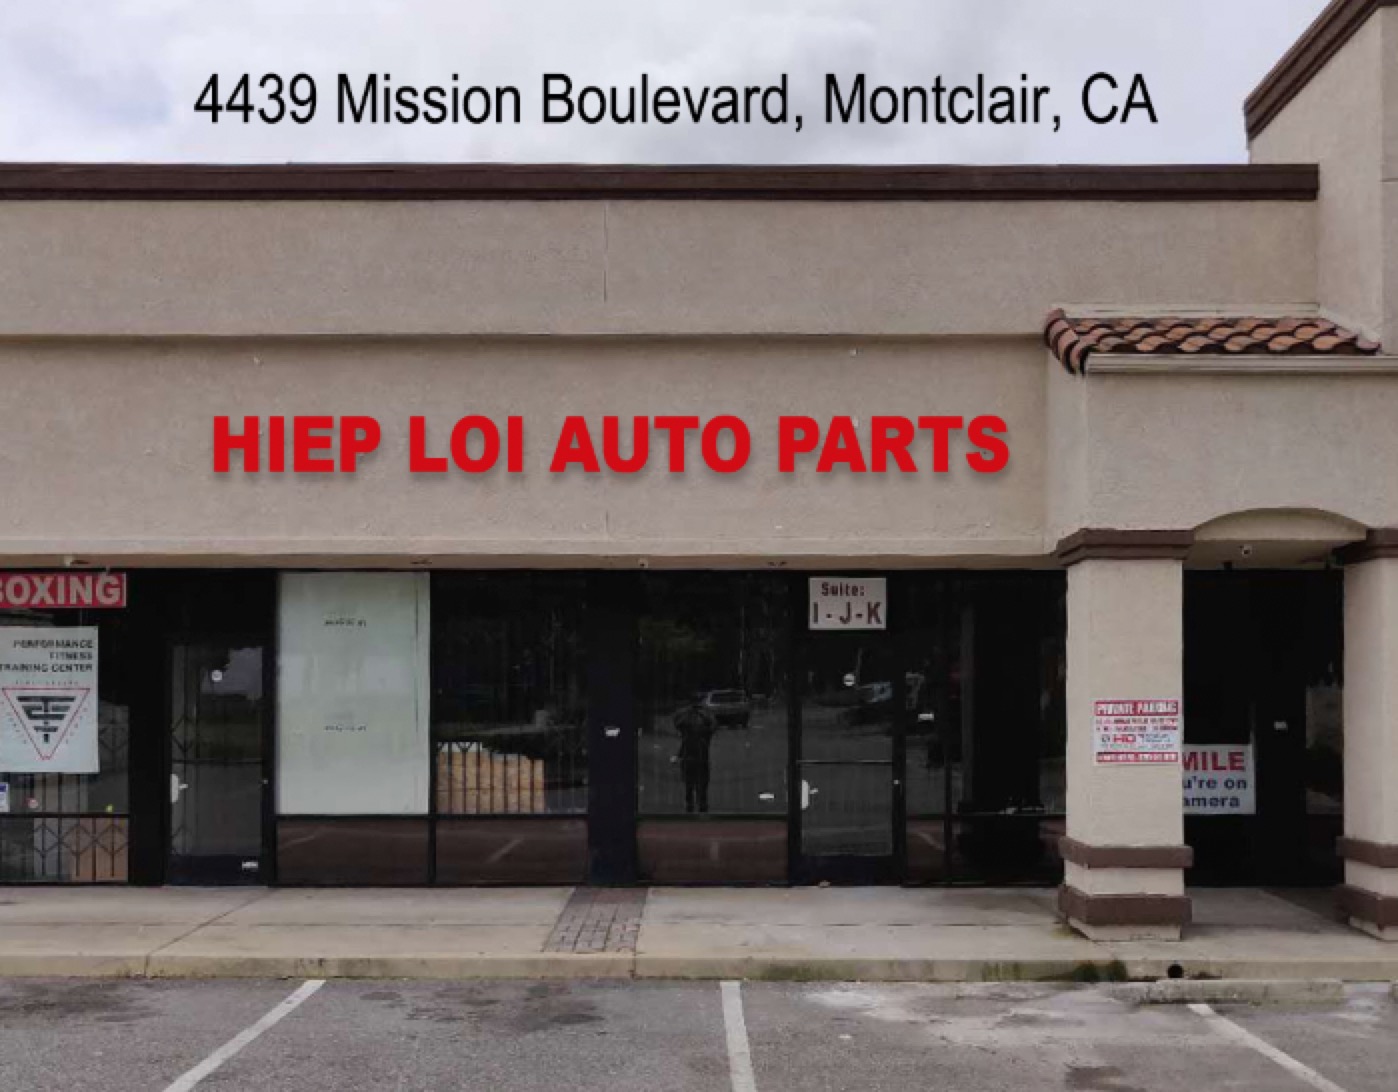 Hiep Loi Auto Parts